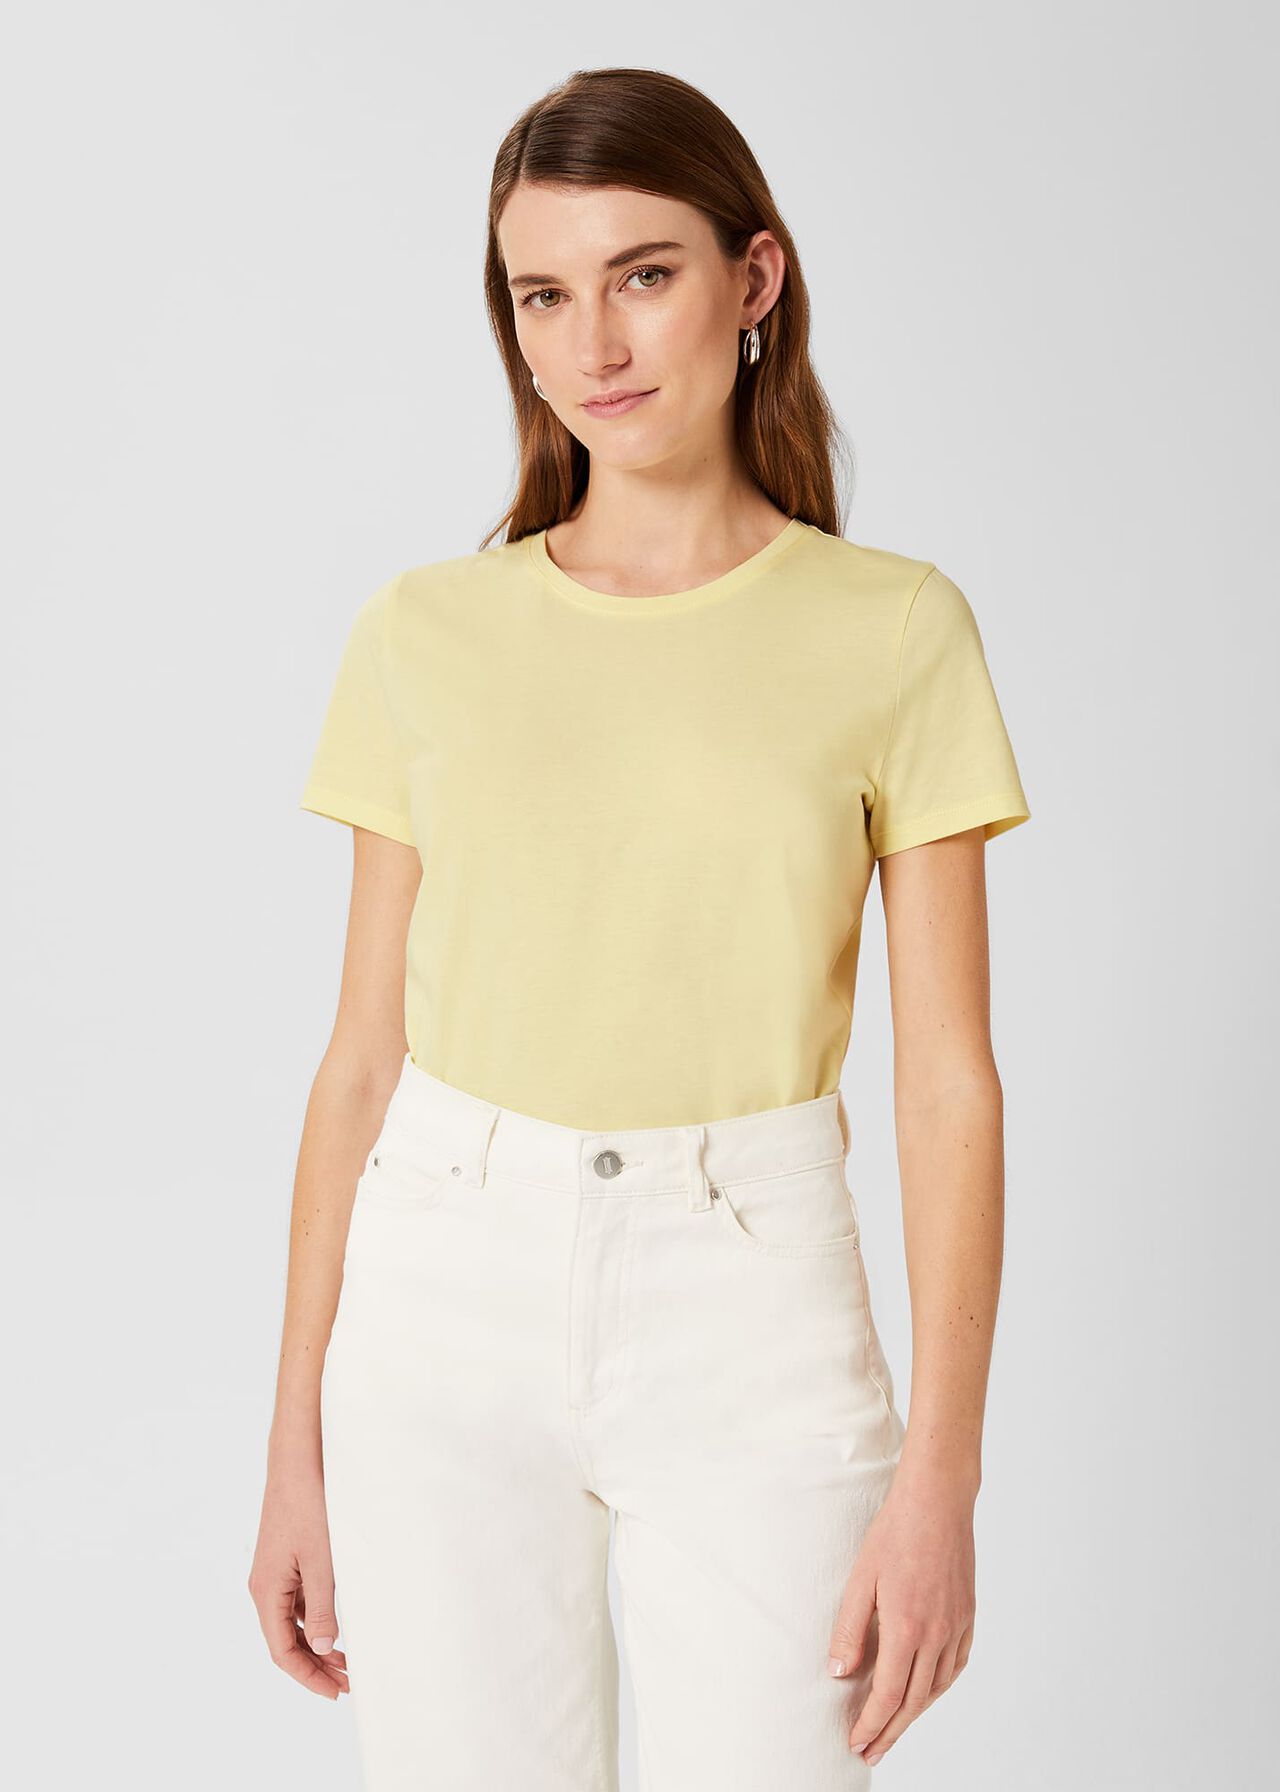 Pixie Cotton T-Shirt, Light Yellow, hi-res